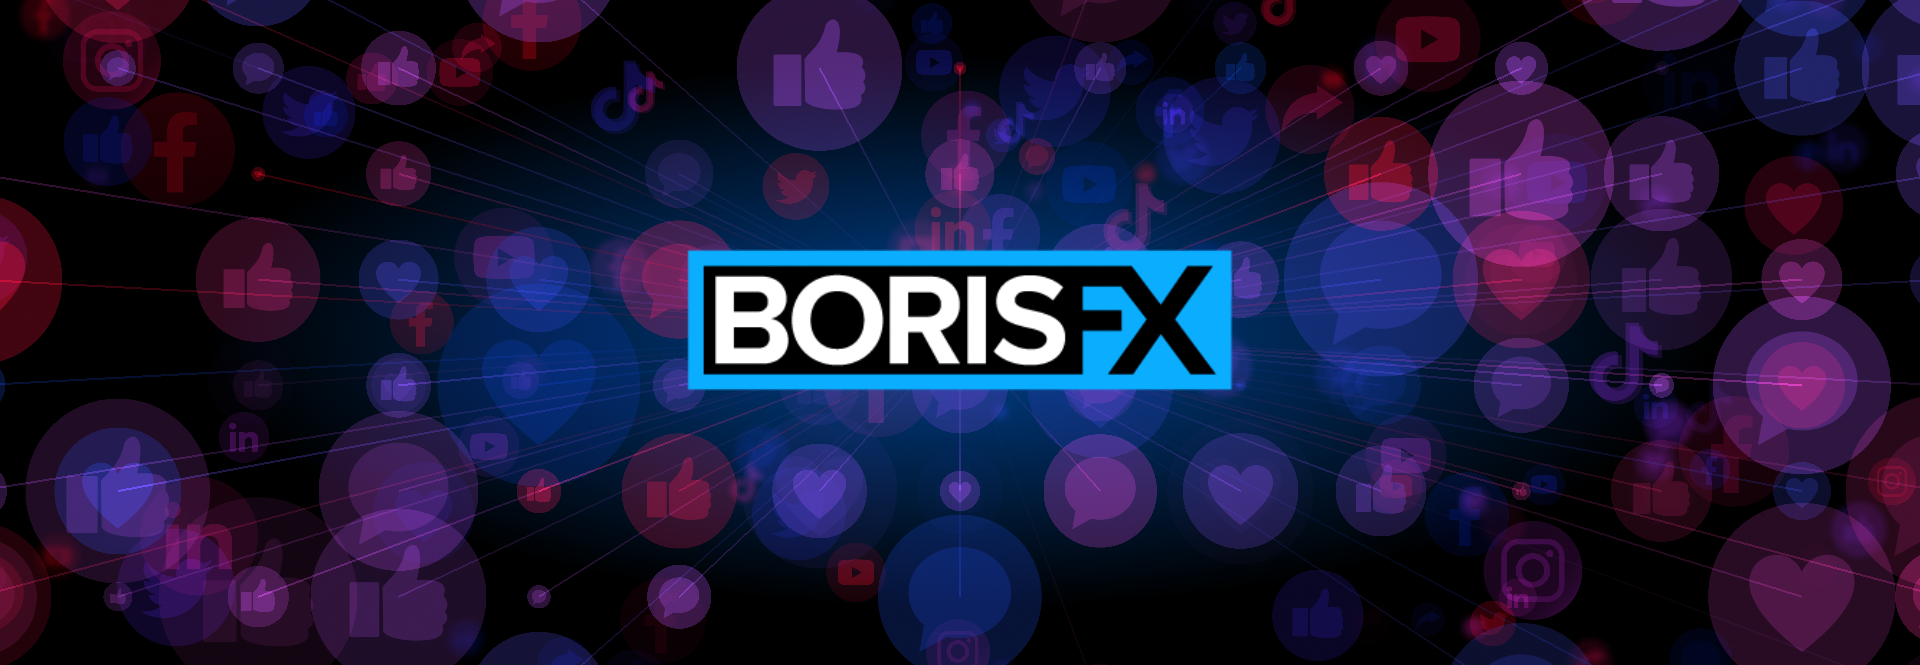 Boris FX Banner